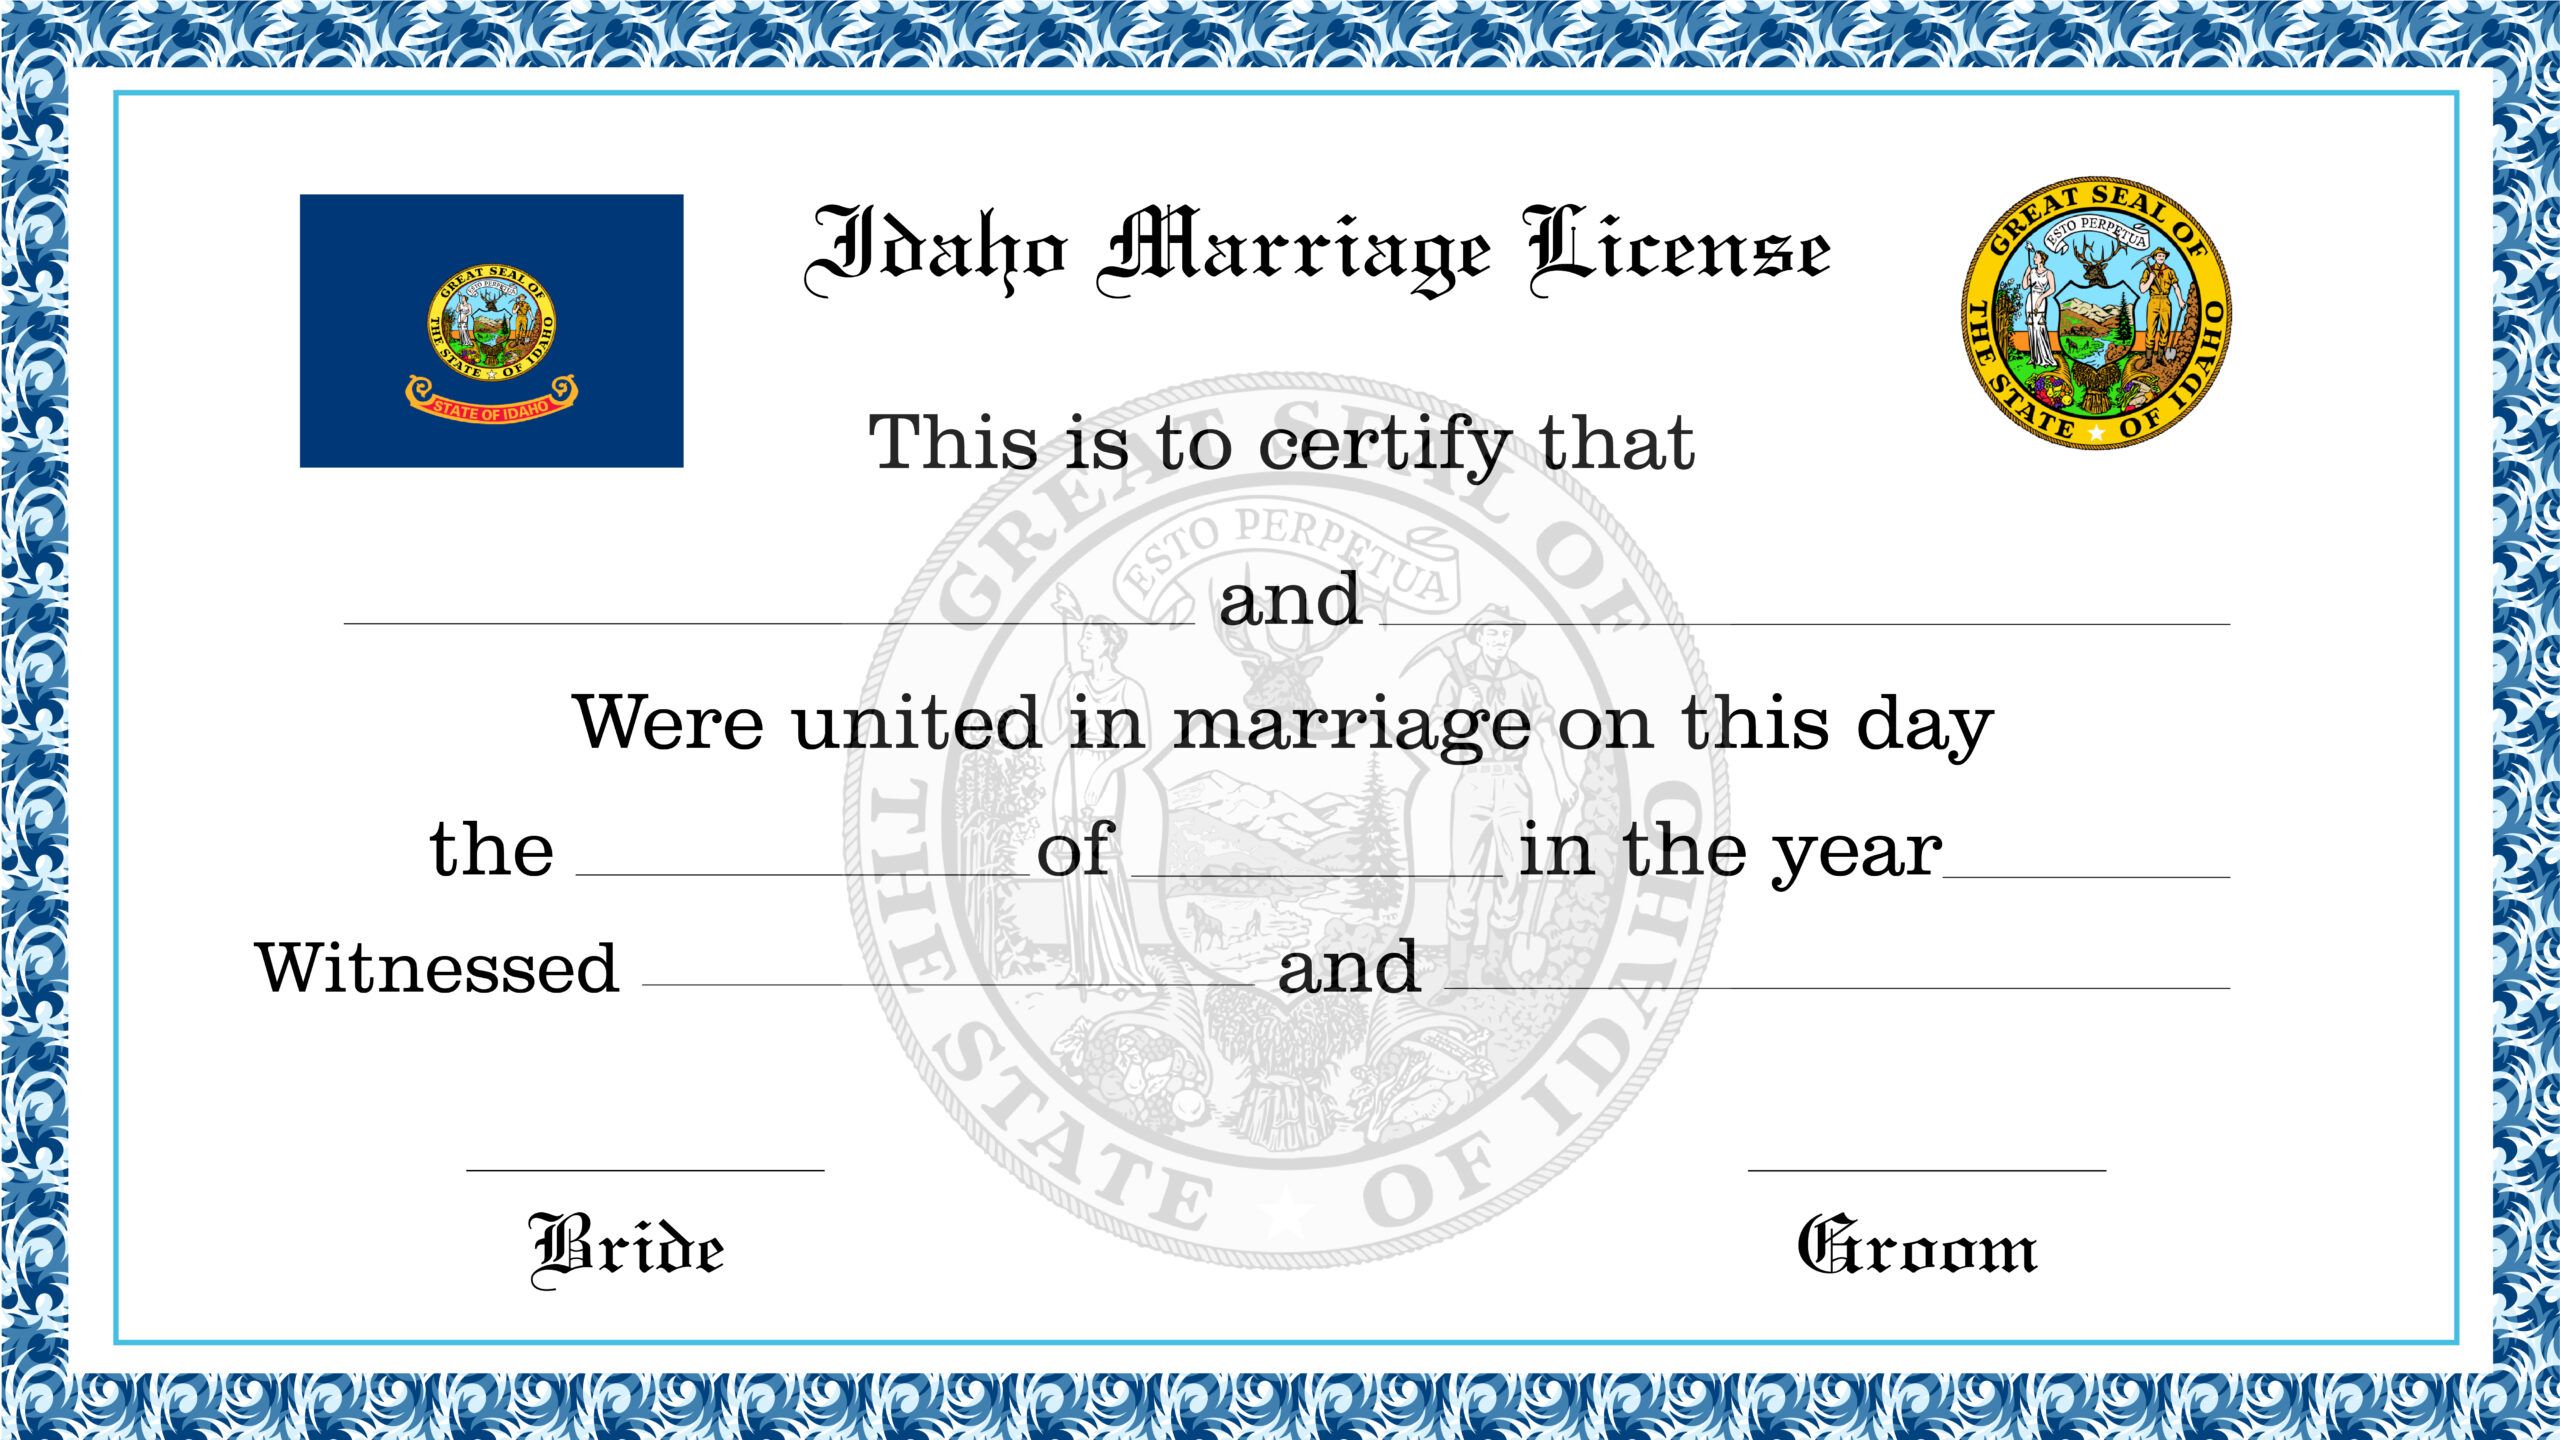 Idaho Marriage License License Lookup